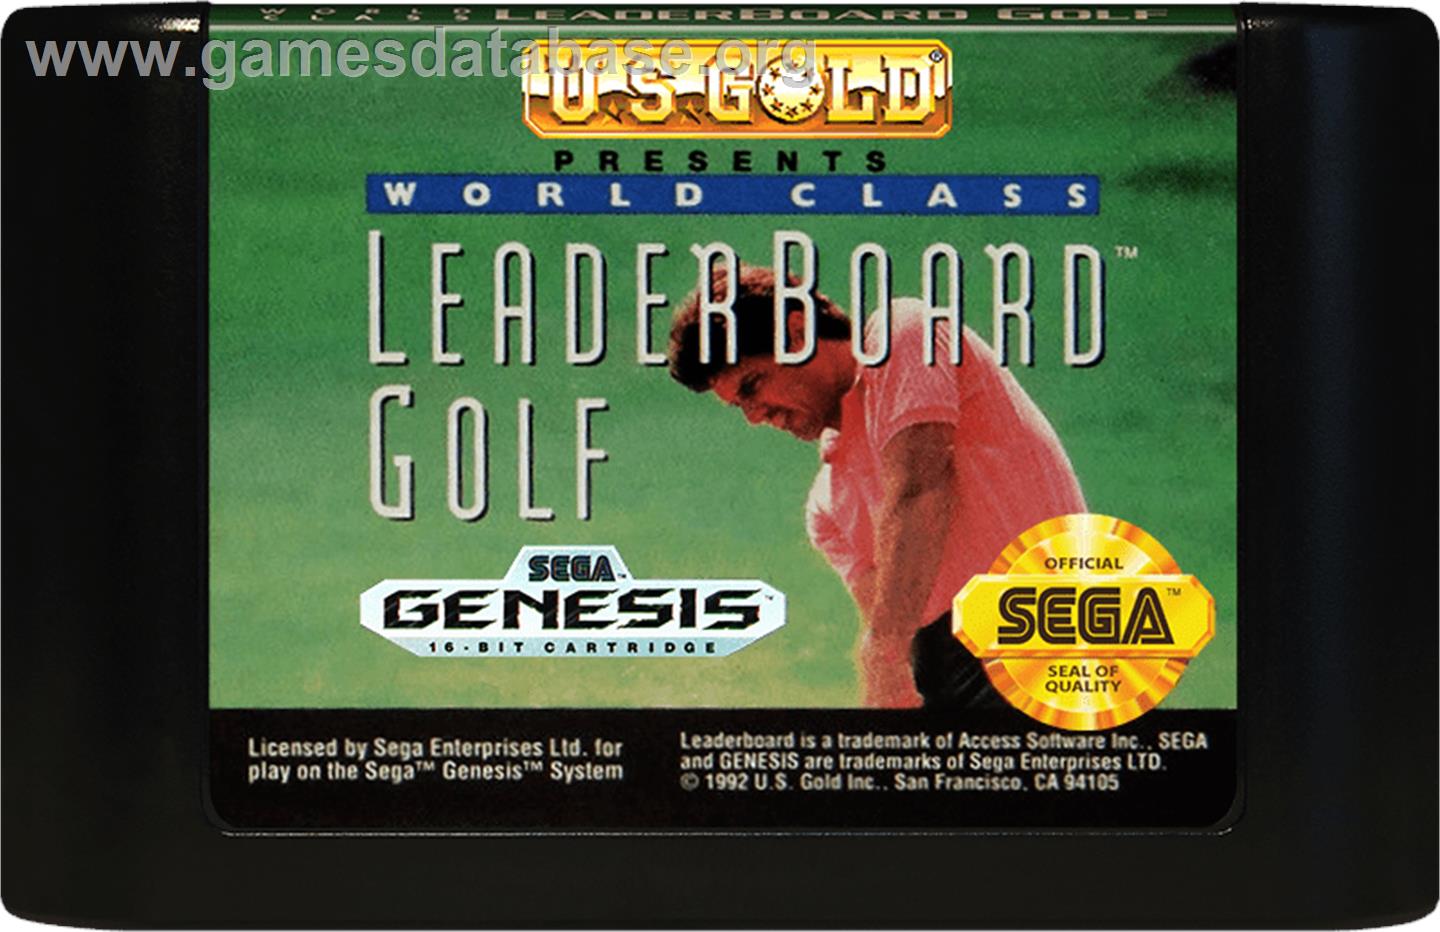 World Class Leaderboard - Sega Genesis - Artwork - Cartridge